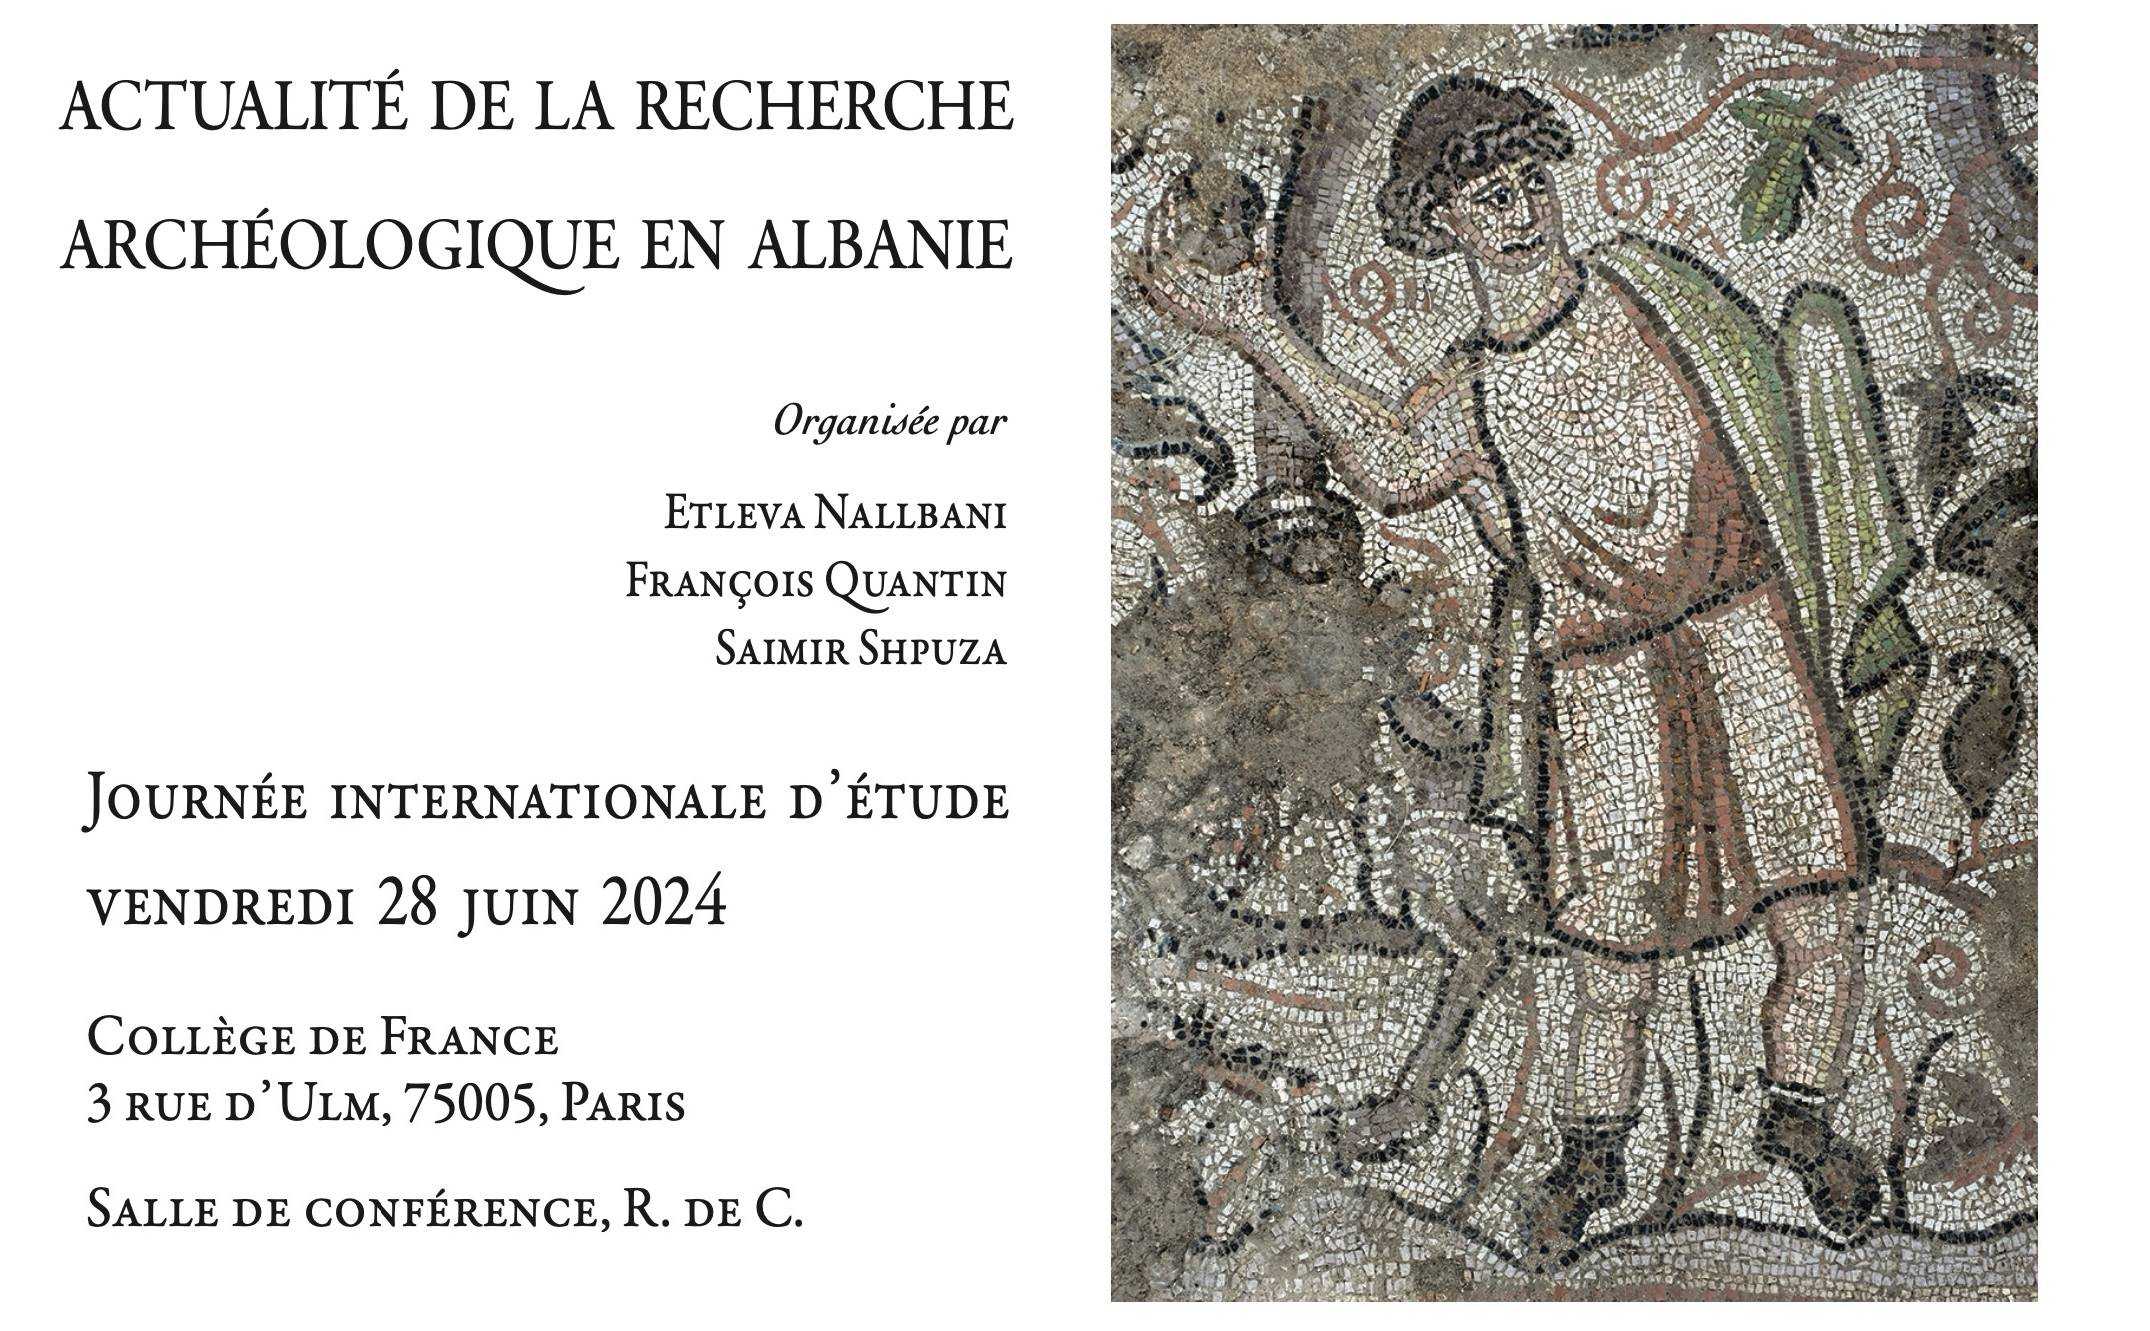 Partecipazione alla conferenza internazionale “Actualité de la recherche archéologique en Albanie”